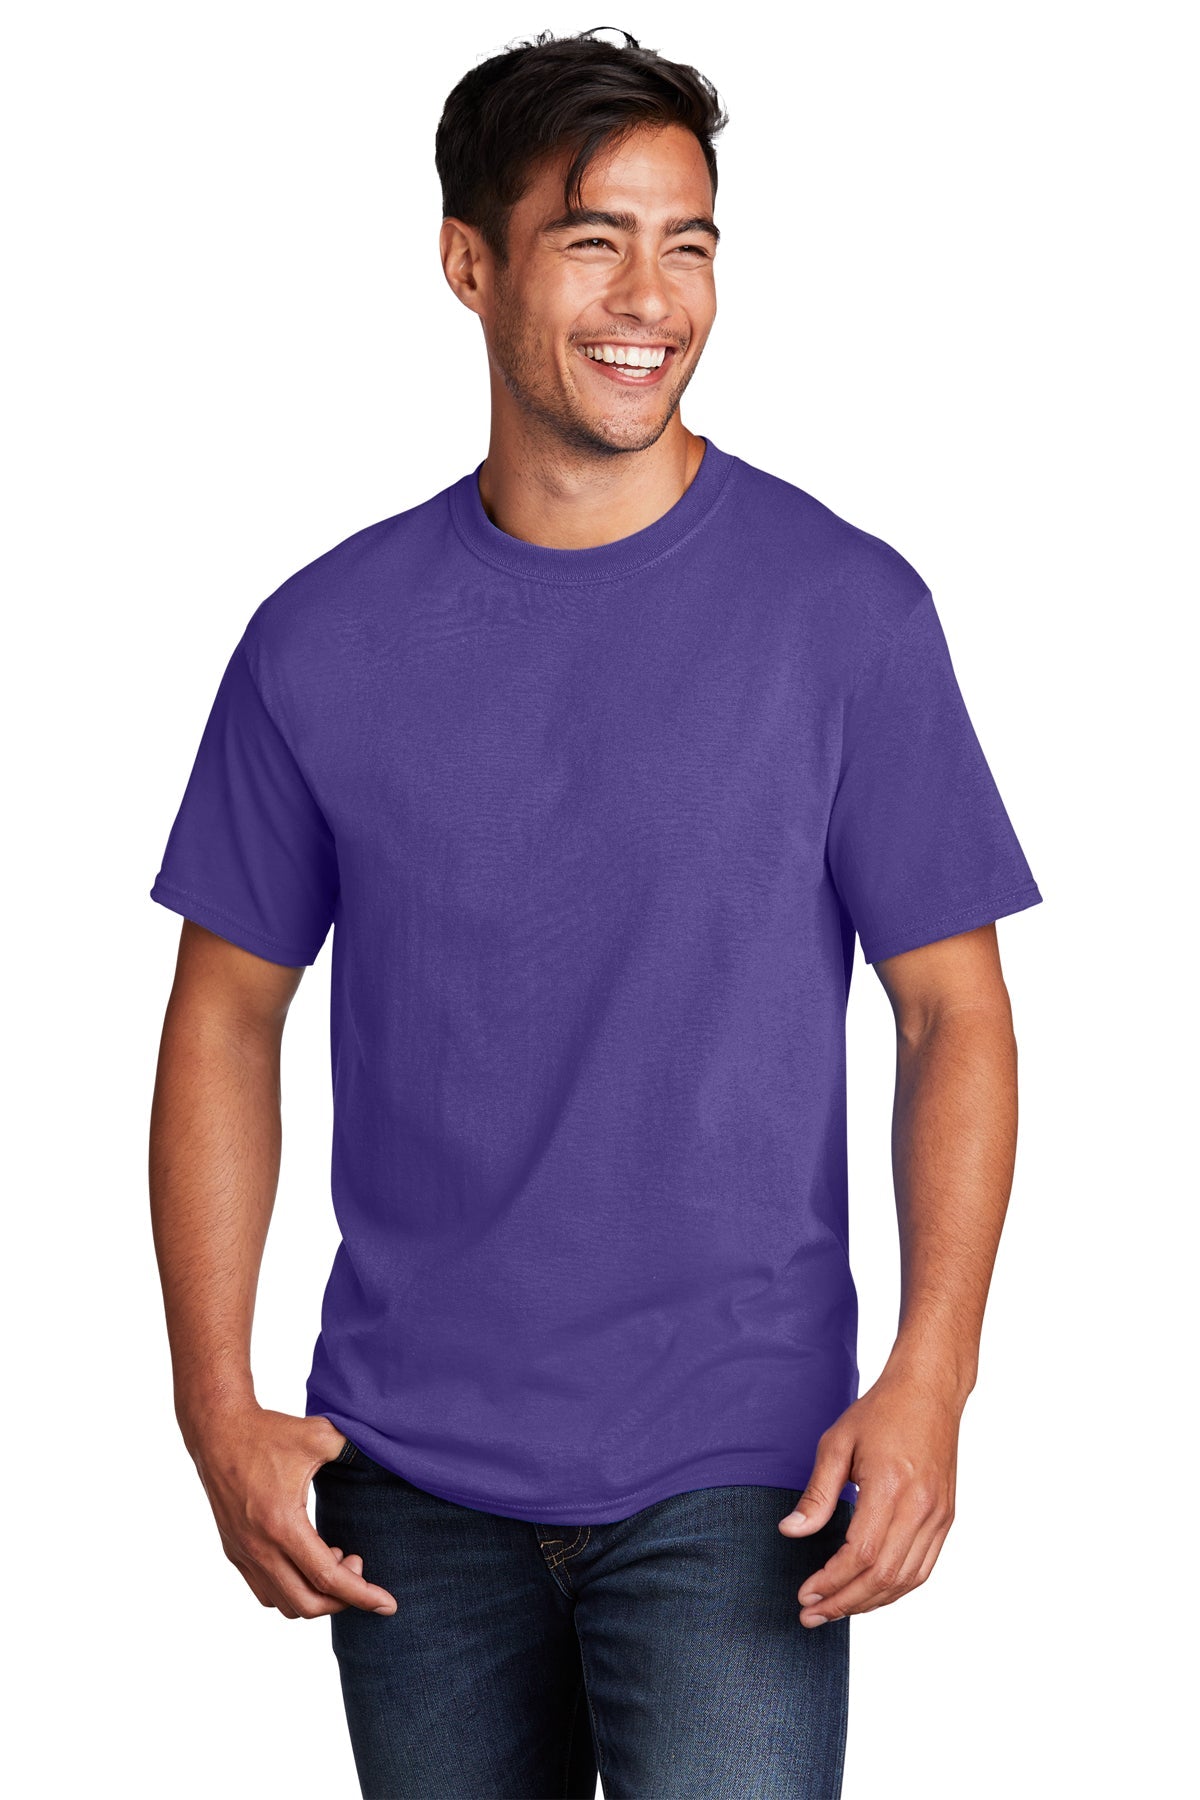 Port & Company Core Cotton DTG Tee - BT Imprintables Shirts